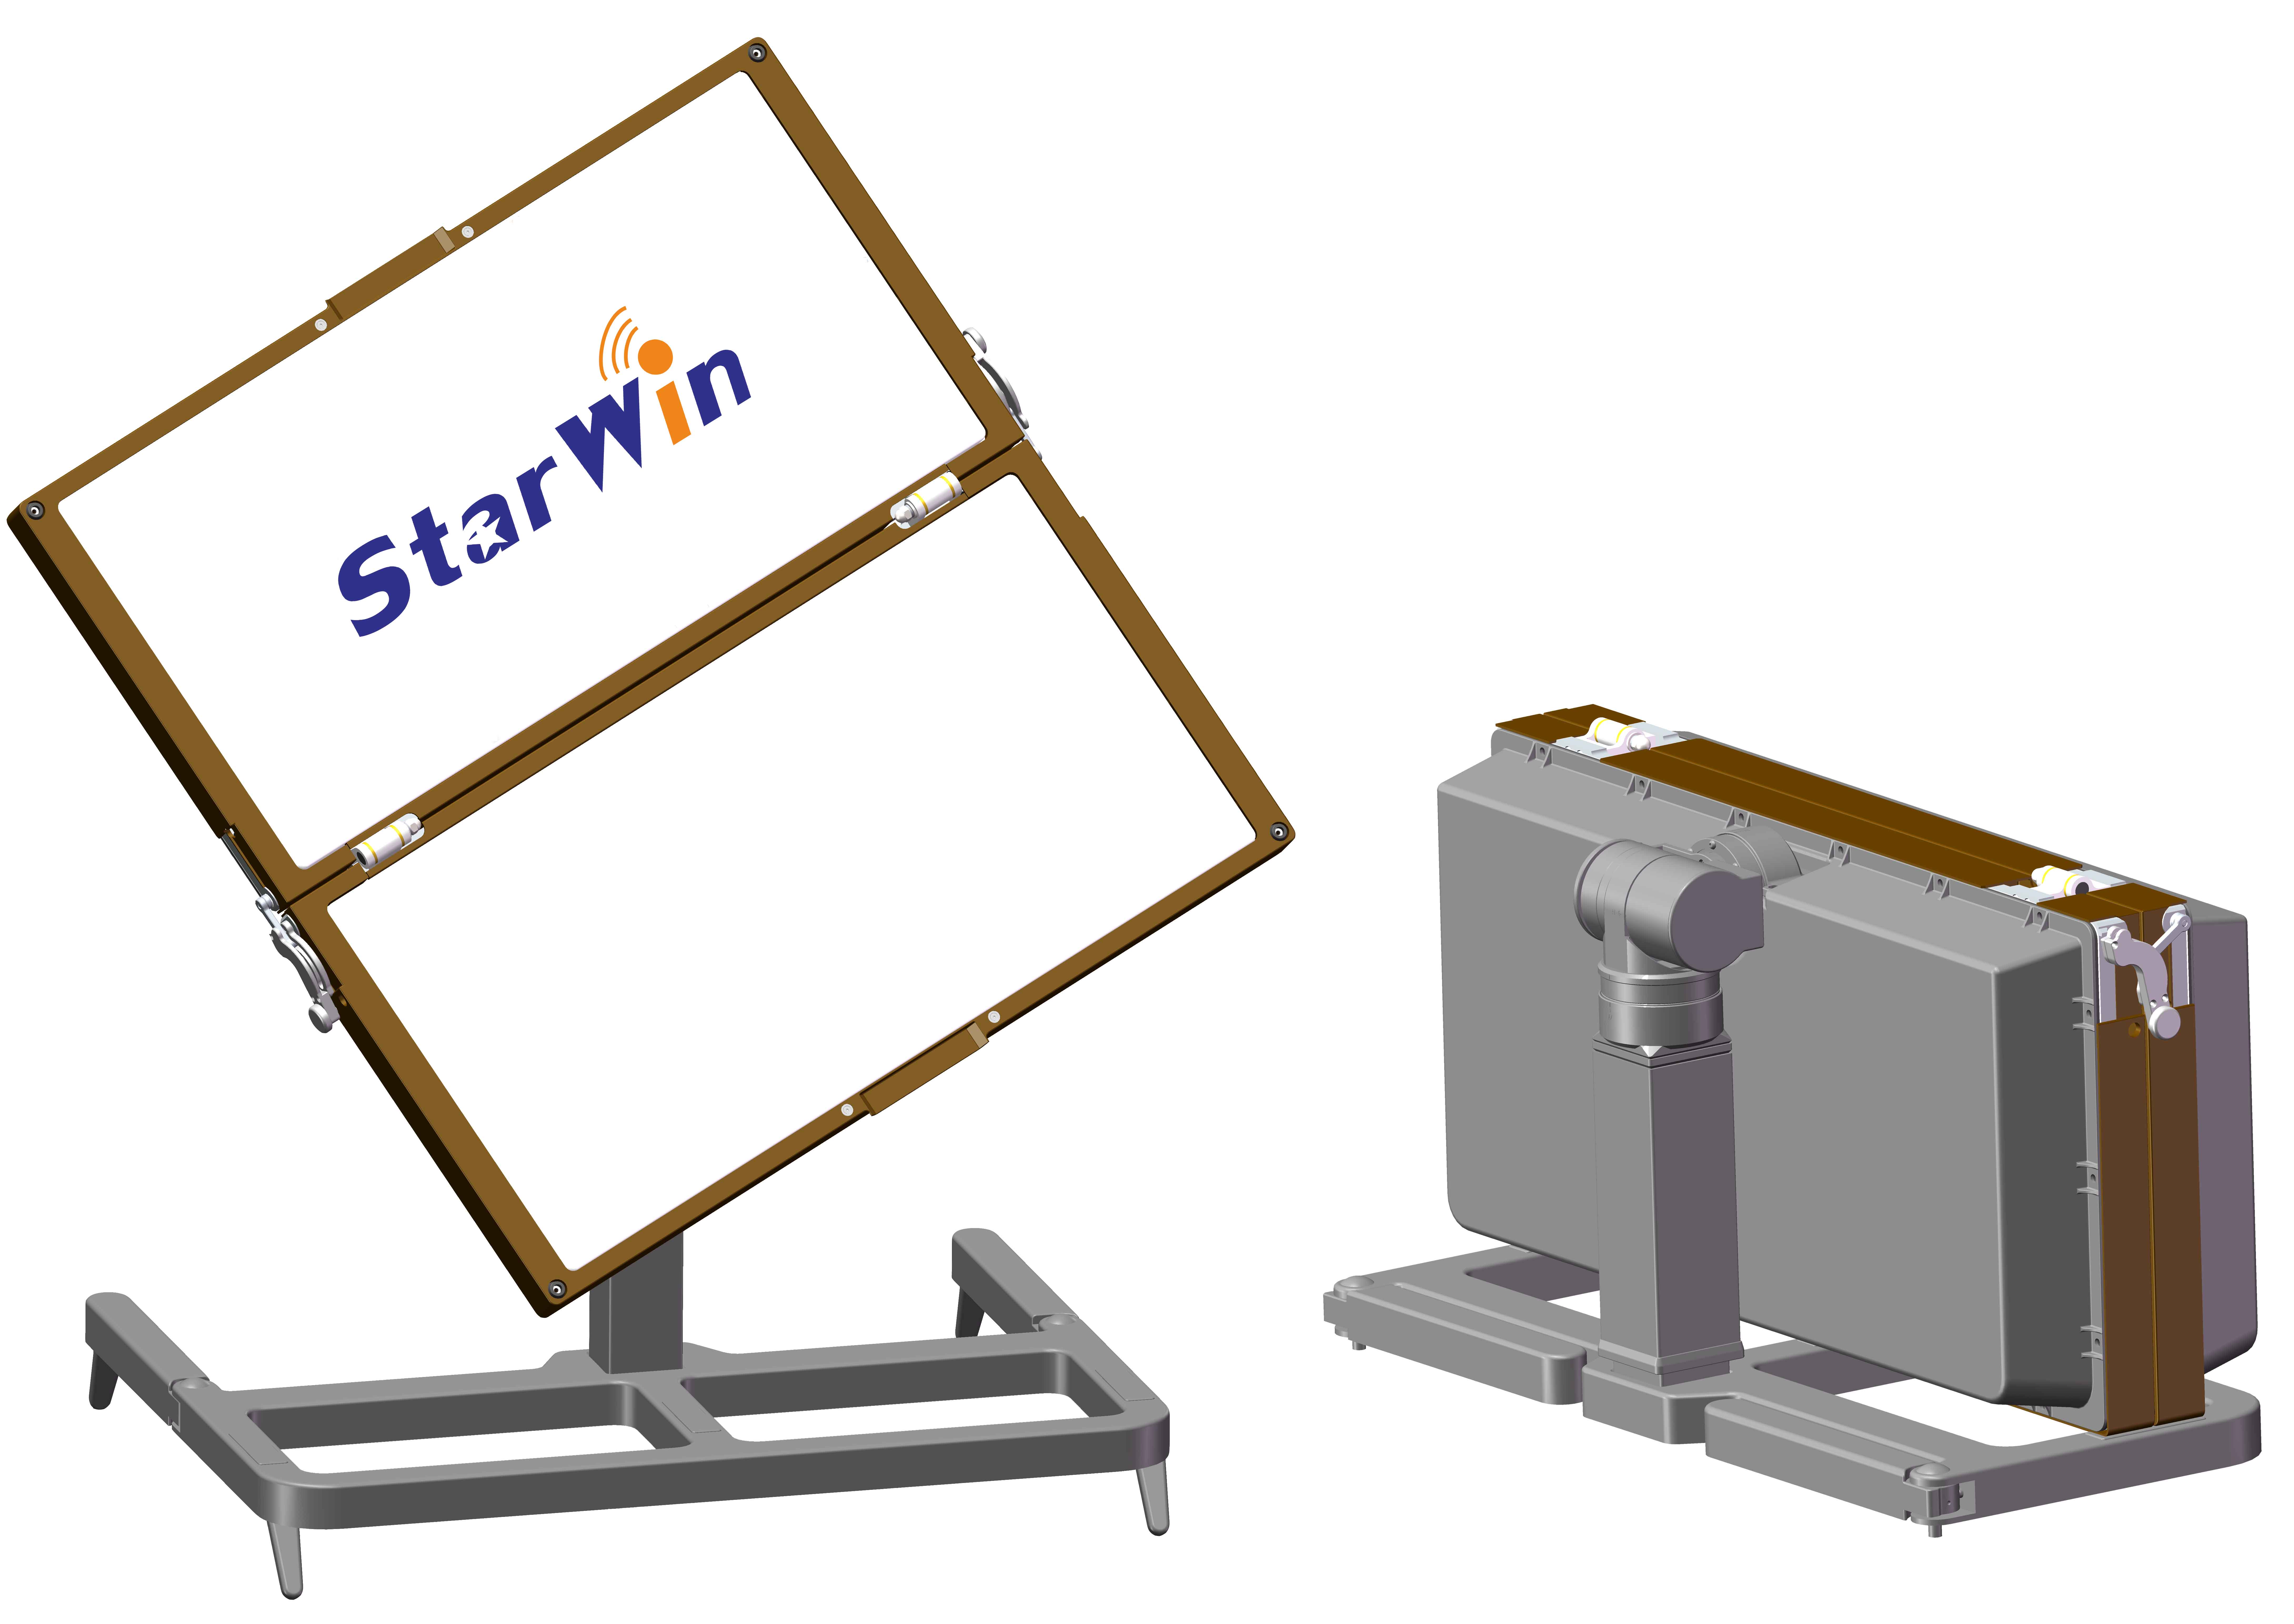 Starwin Foldable VSAT Antenna